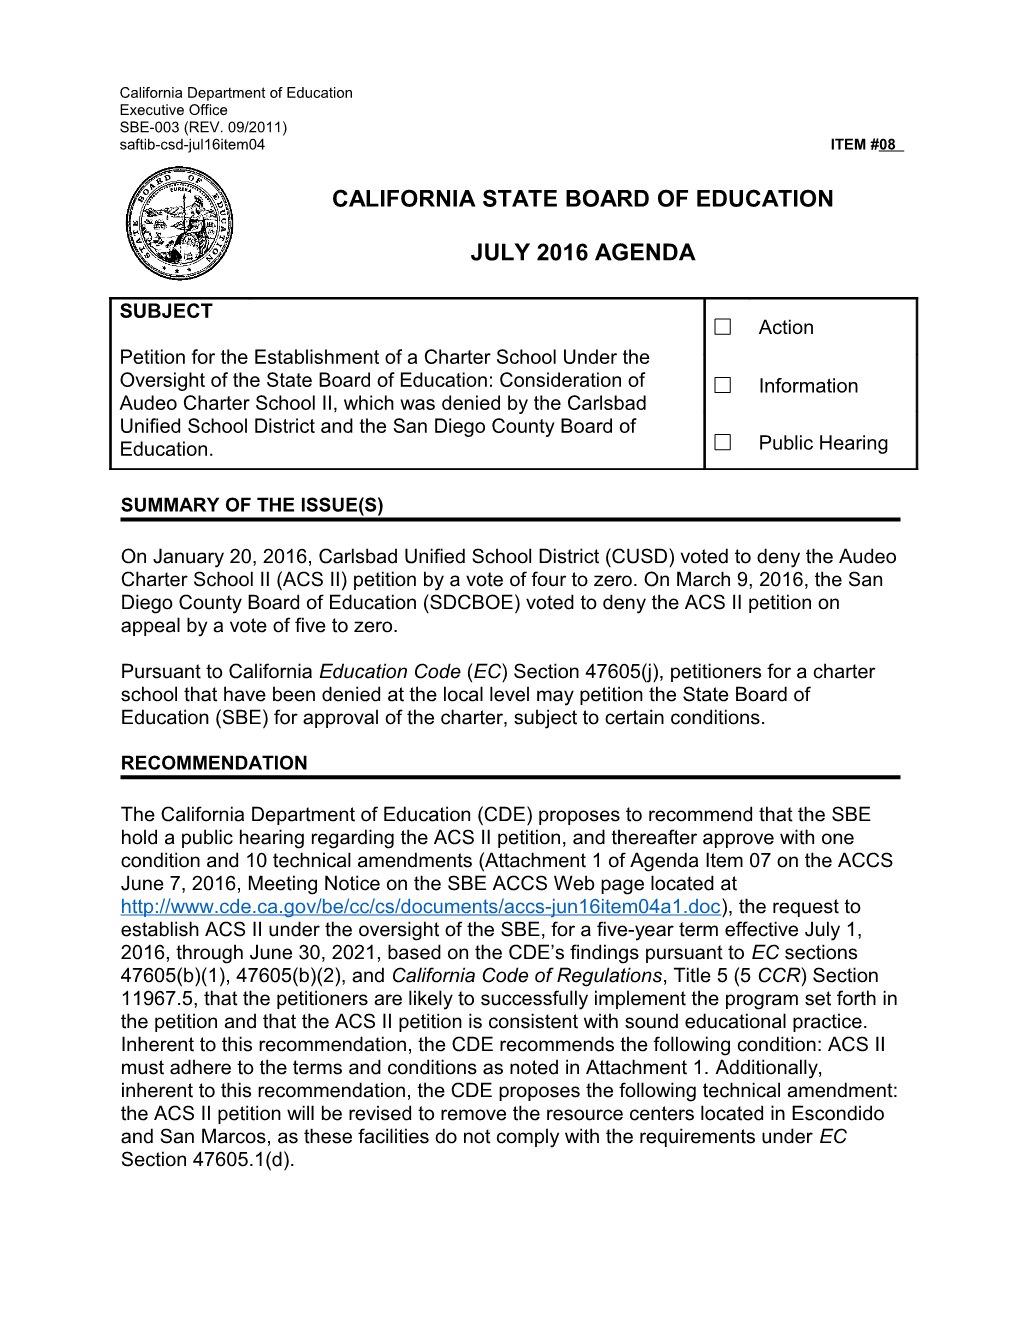 July 2016 Agenda Item 08 - Meeting Agendas (CA State Board of Education)